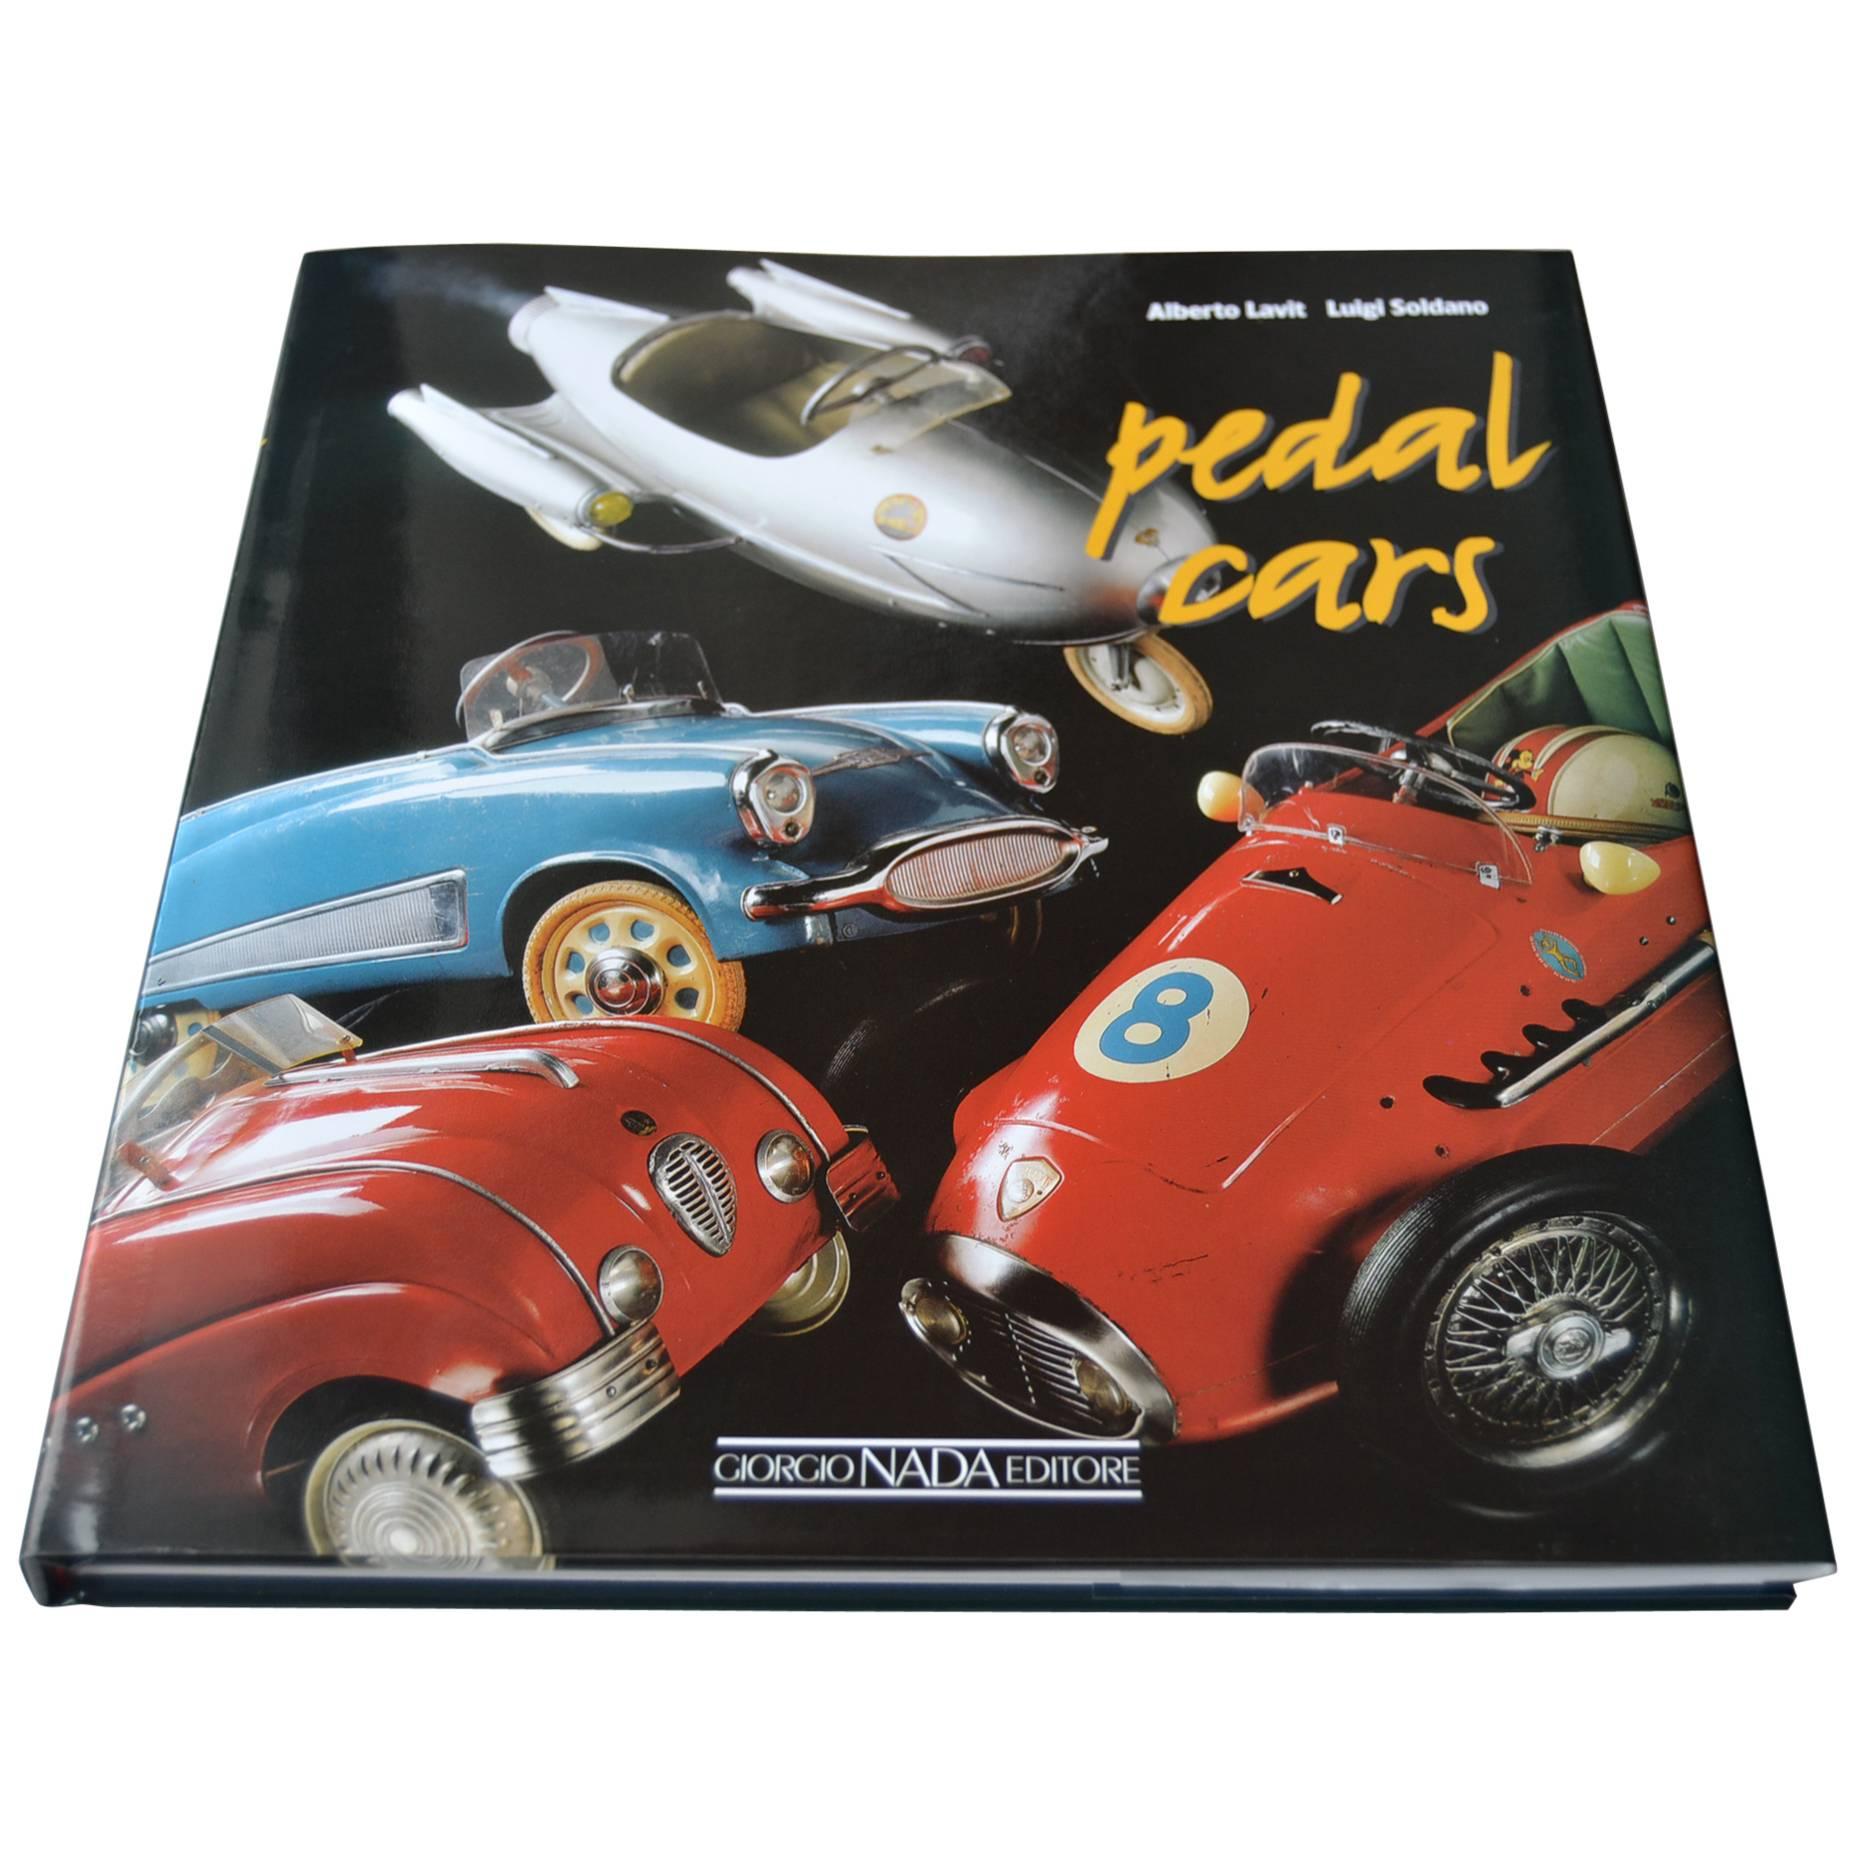 Italian Pedal Cars Book by Alberto Lavit 